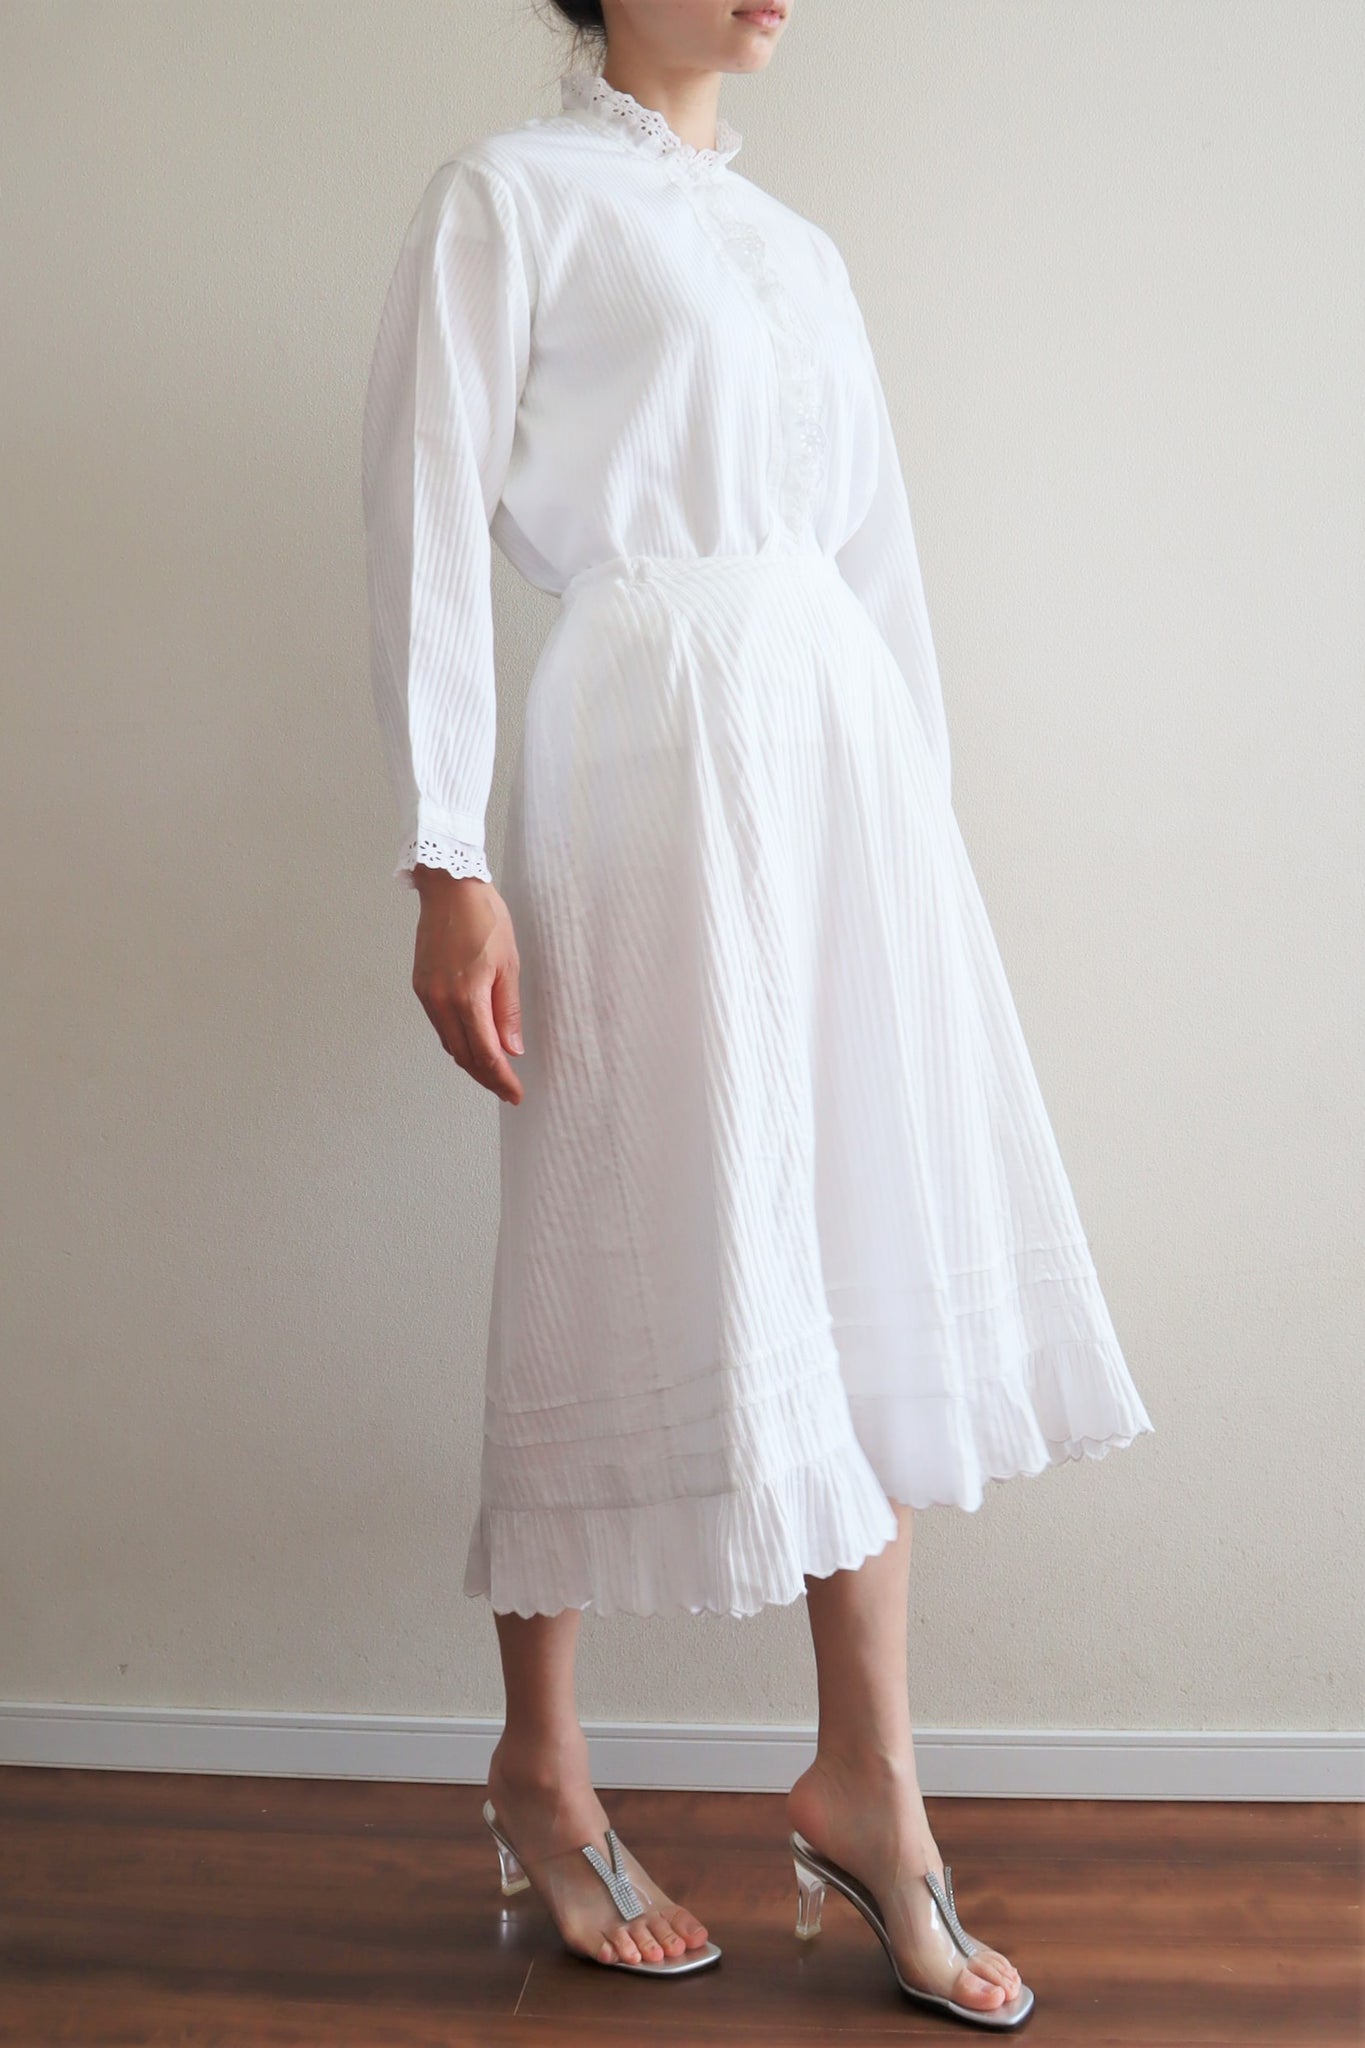 1920s French Soft Cotton Petticoat Skirt